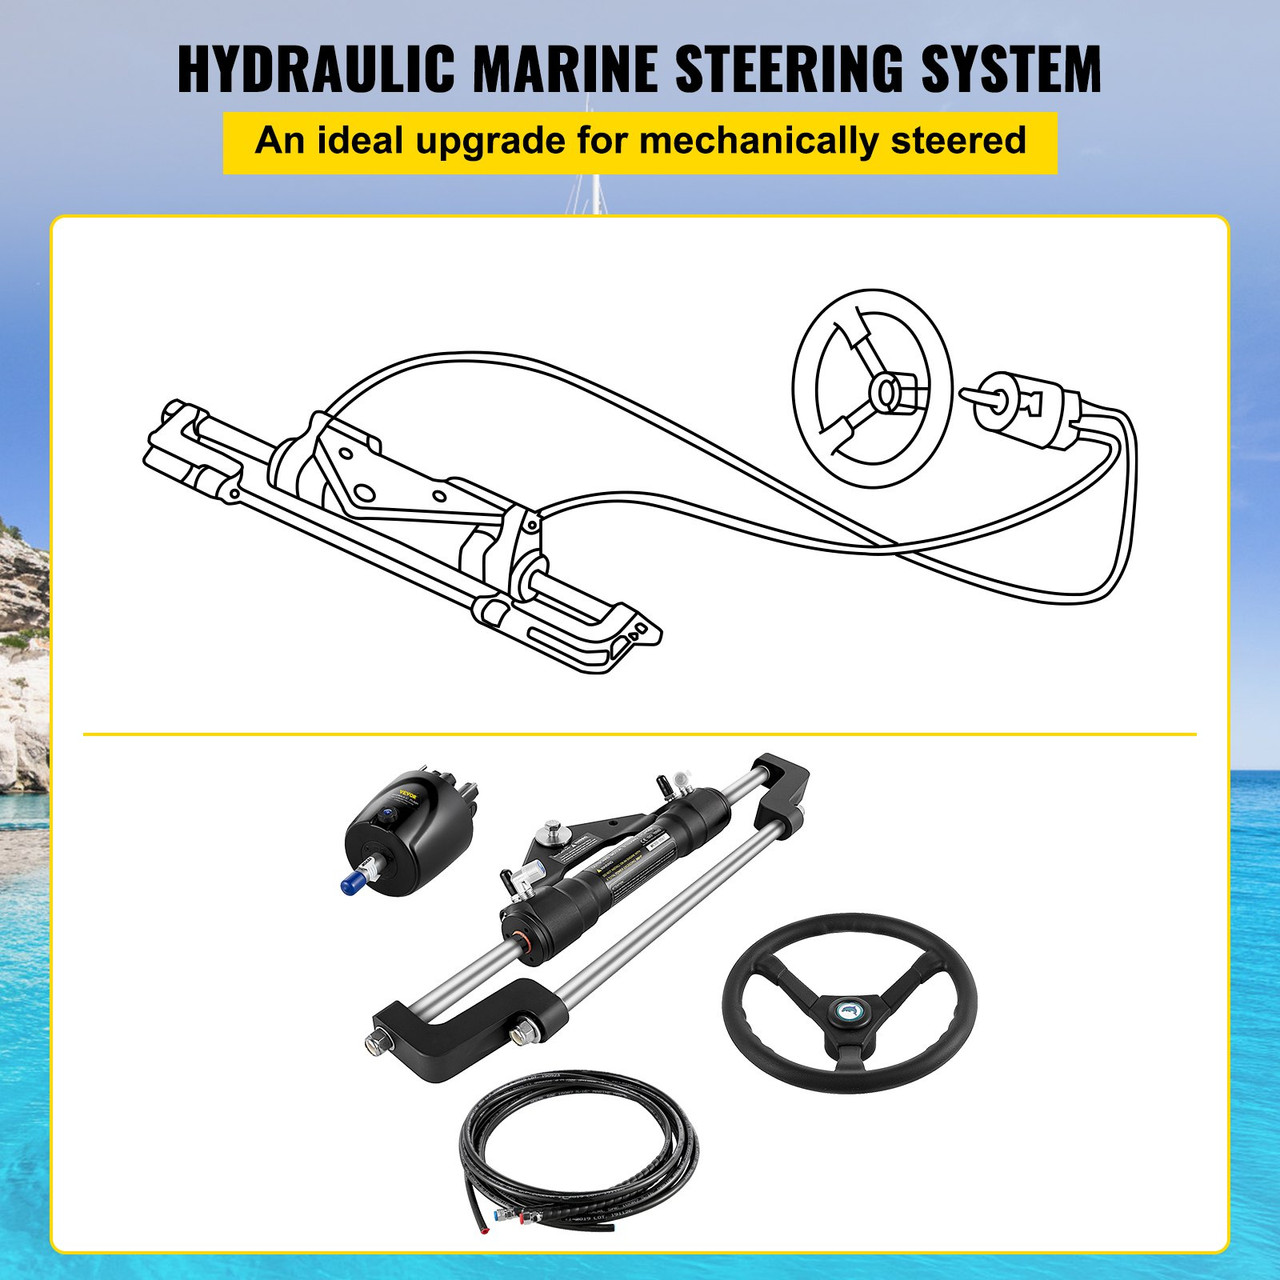 Hydraulic Outboard Steering Kit 300HP, Hydraulic Steering Kit Helm Pump, Hydraulic Boat Steering Kit with 16 Feet Hydraulic Steering Hose for Boat Steering System